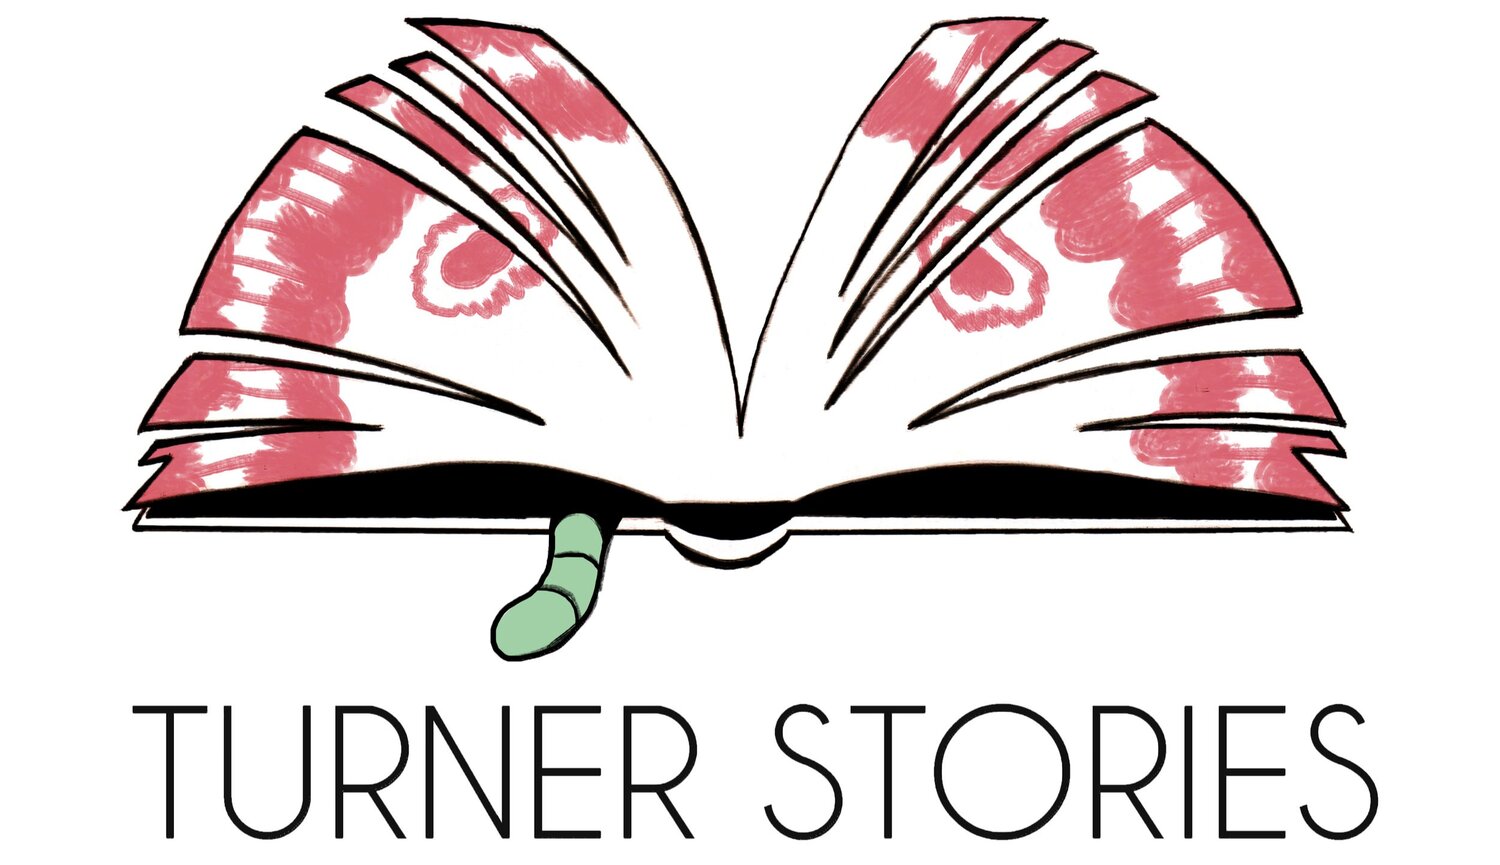 Turner Stories